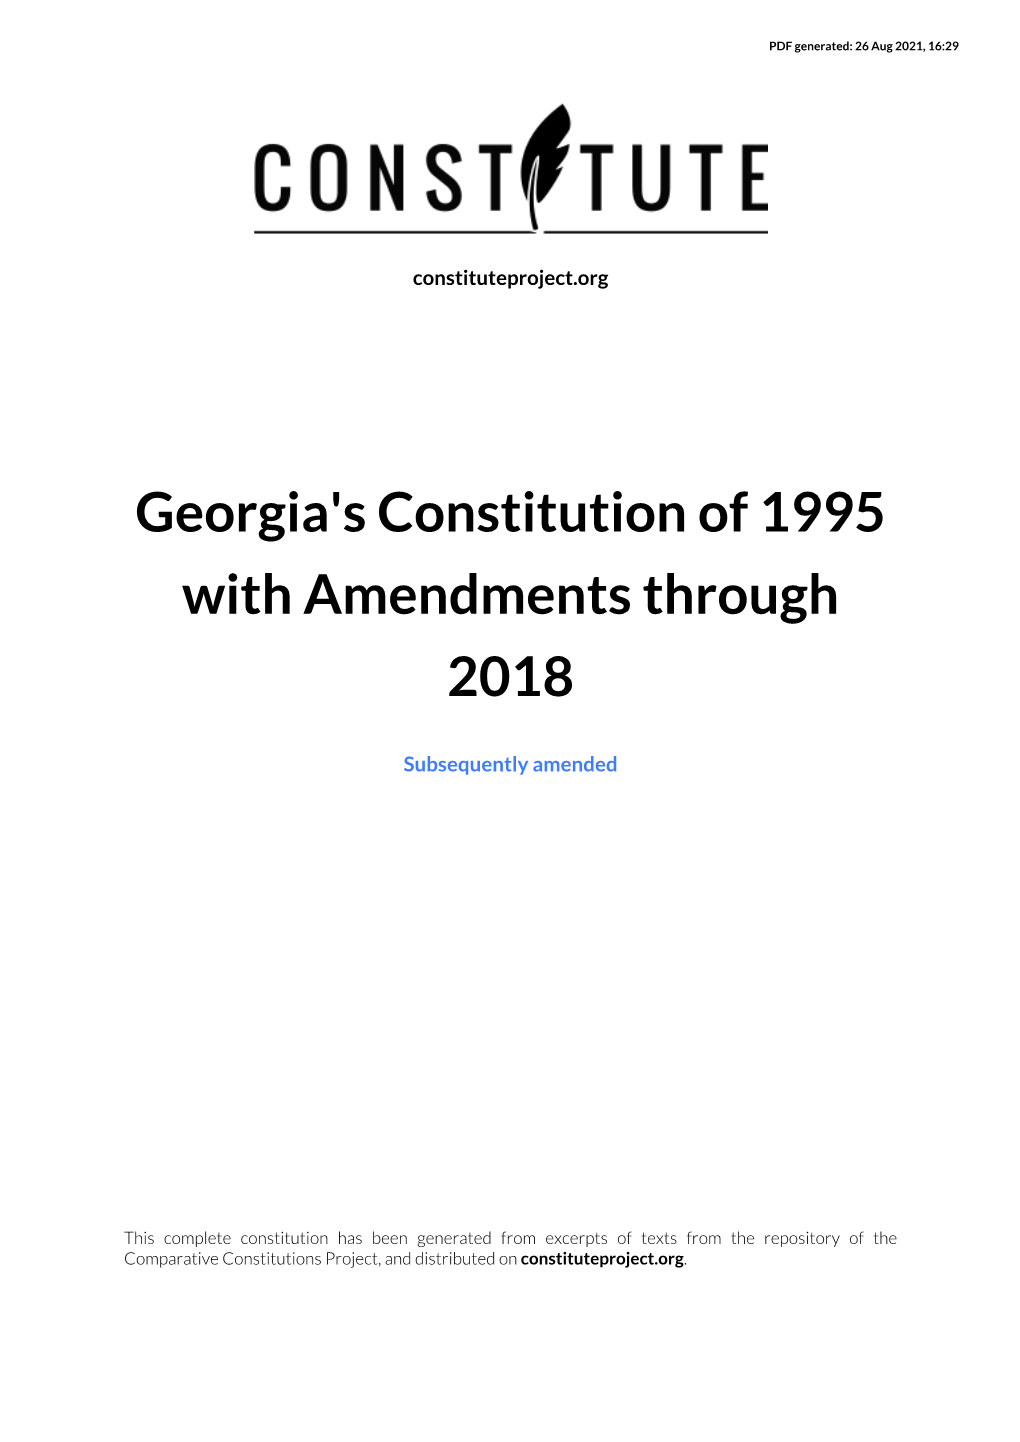 Georgia's Constitution of 1995 with Amendments Through 2018